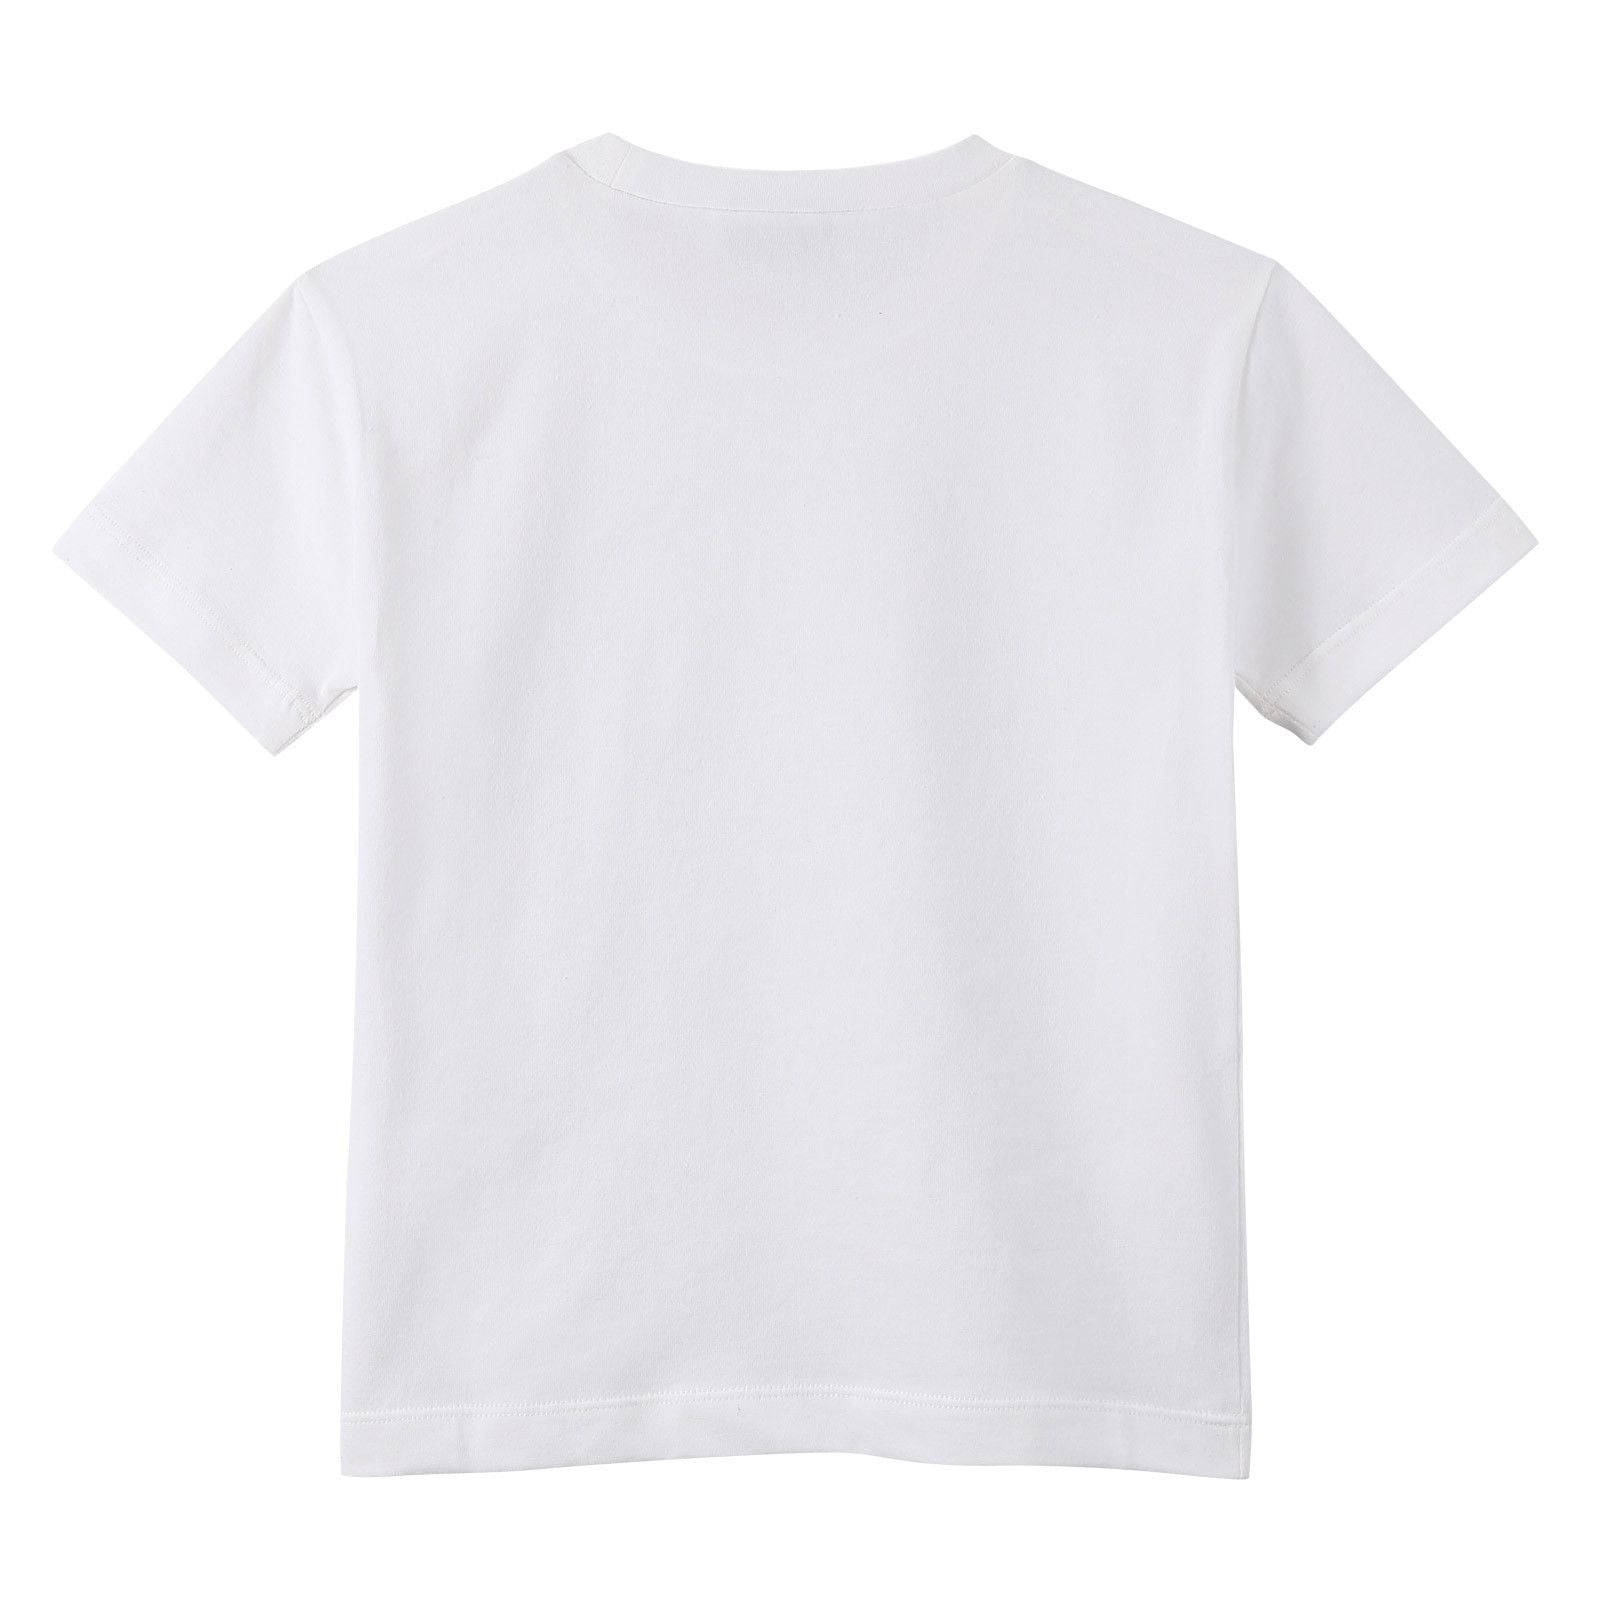 Boys White Cotton T-Shirt With Gray Rhinestone Logo - CÉMAROSE | Children's Fashion Store - 2